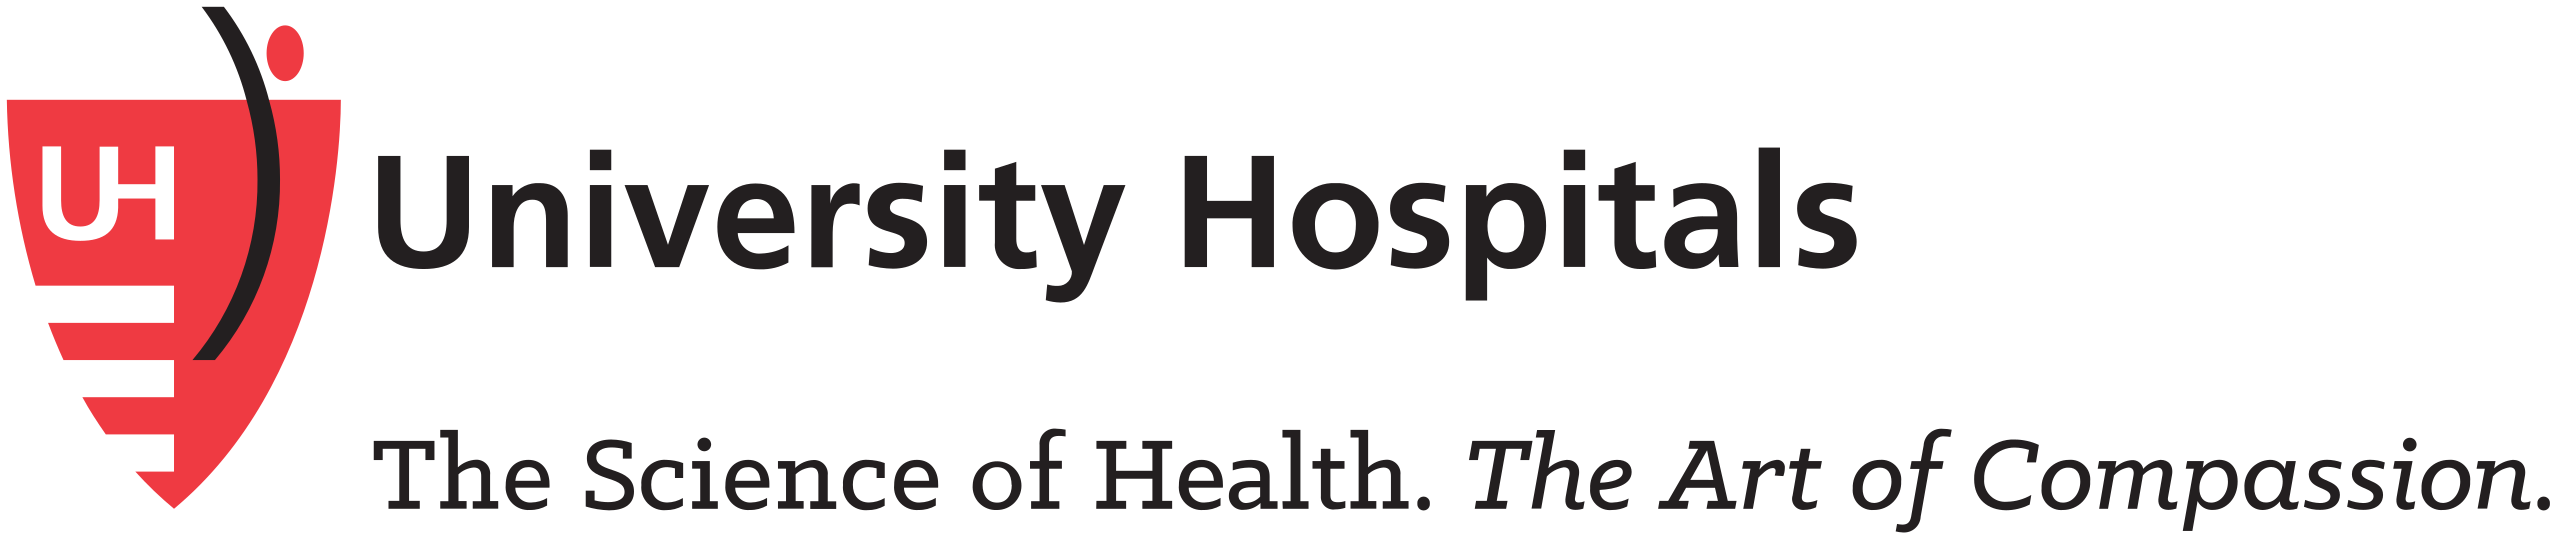 University_Hospitals_logo